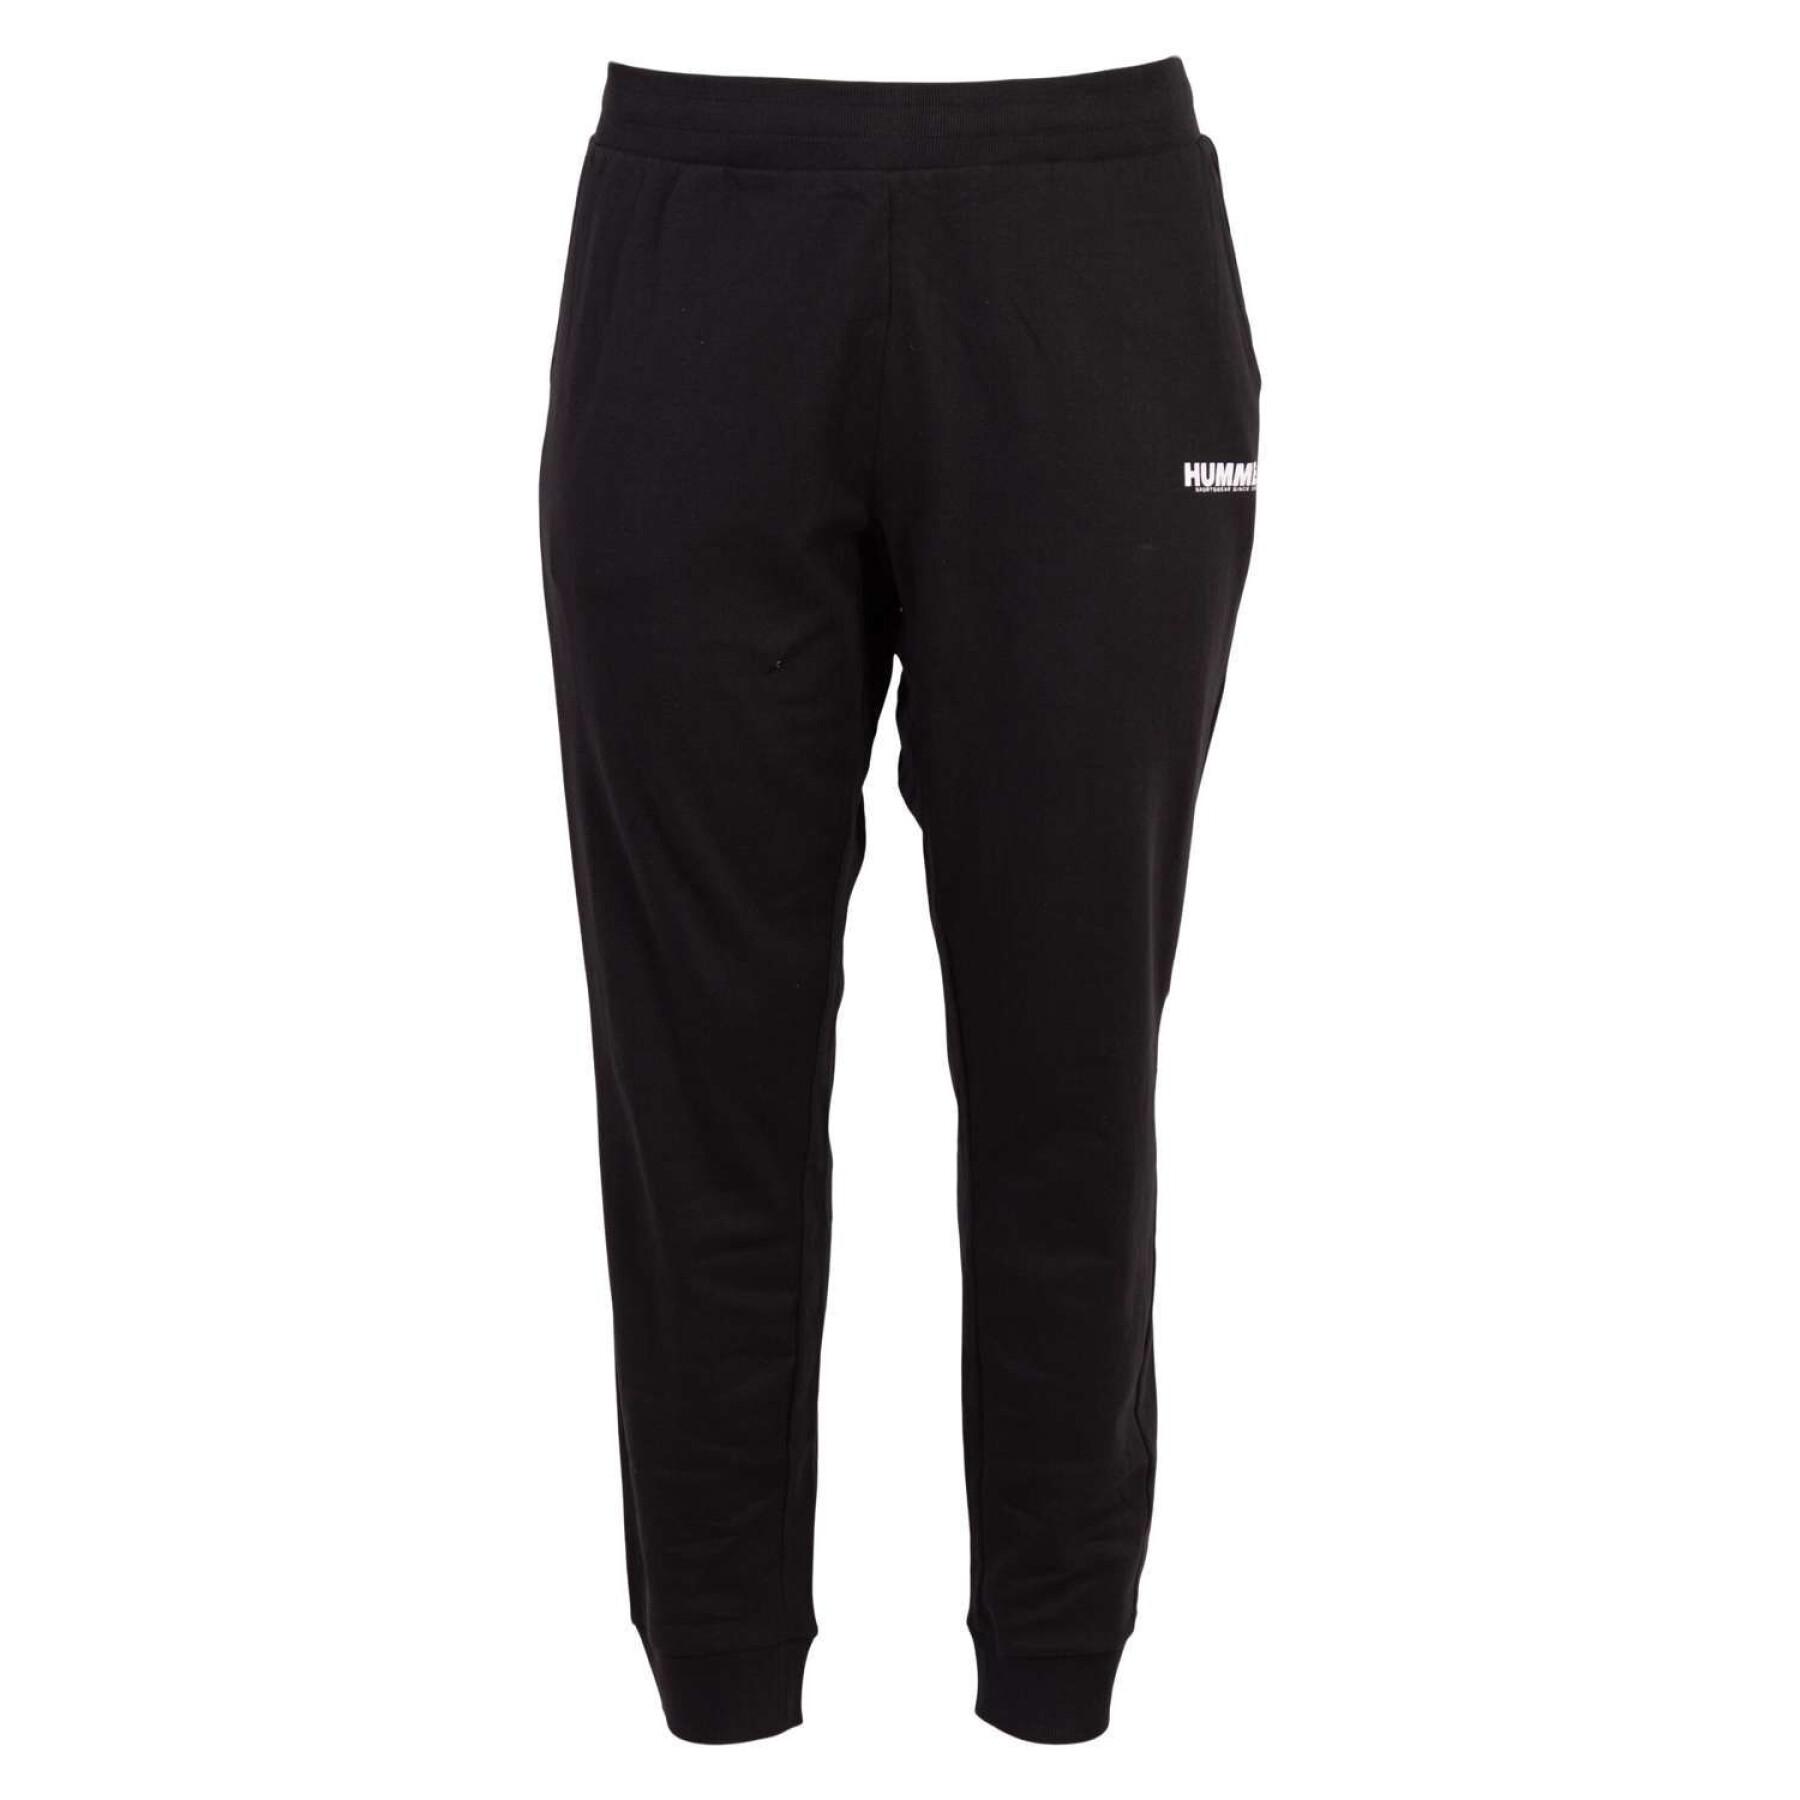 Women's tapered jogging suit Hummel Legacy Plus - Hummel - Brands -  Lifestyle